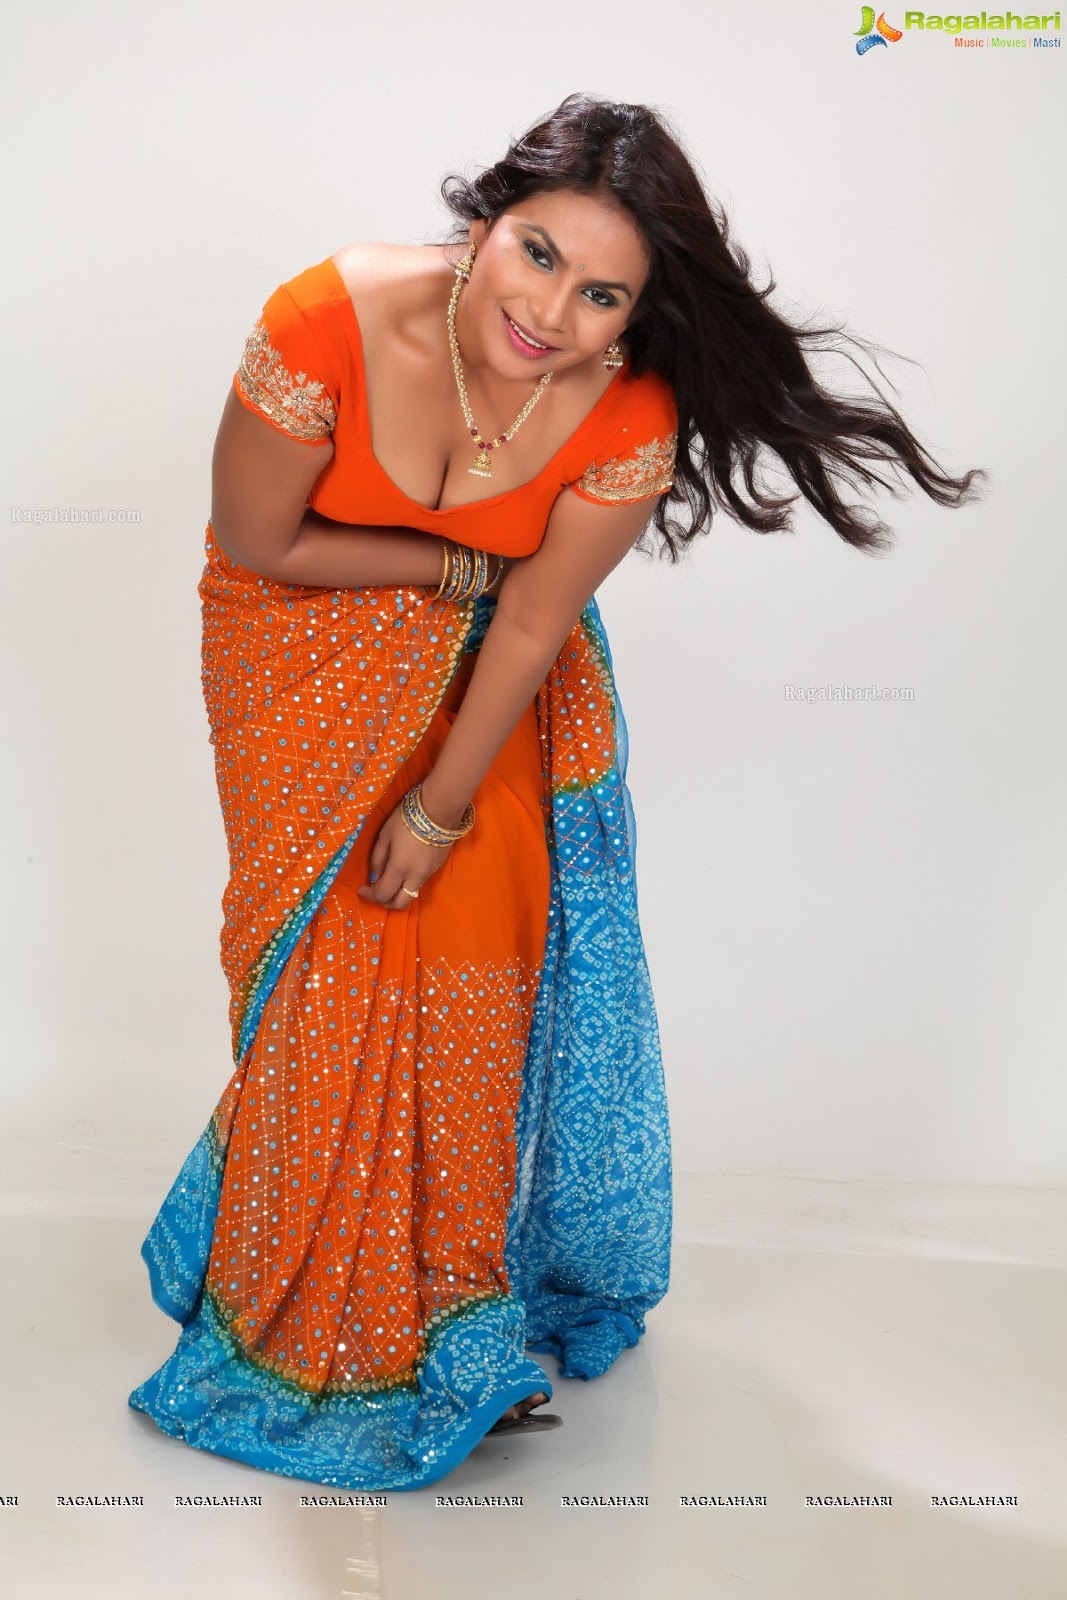 Indian sari stripper pics and galleries